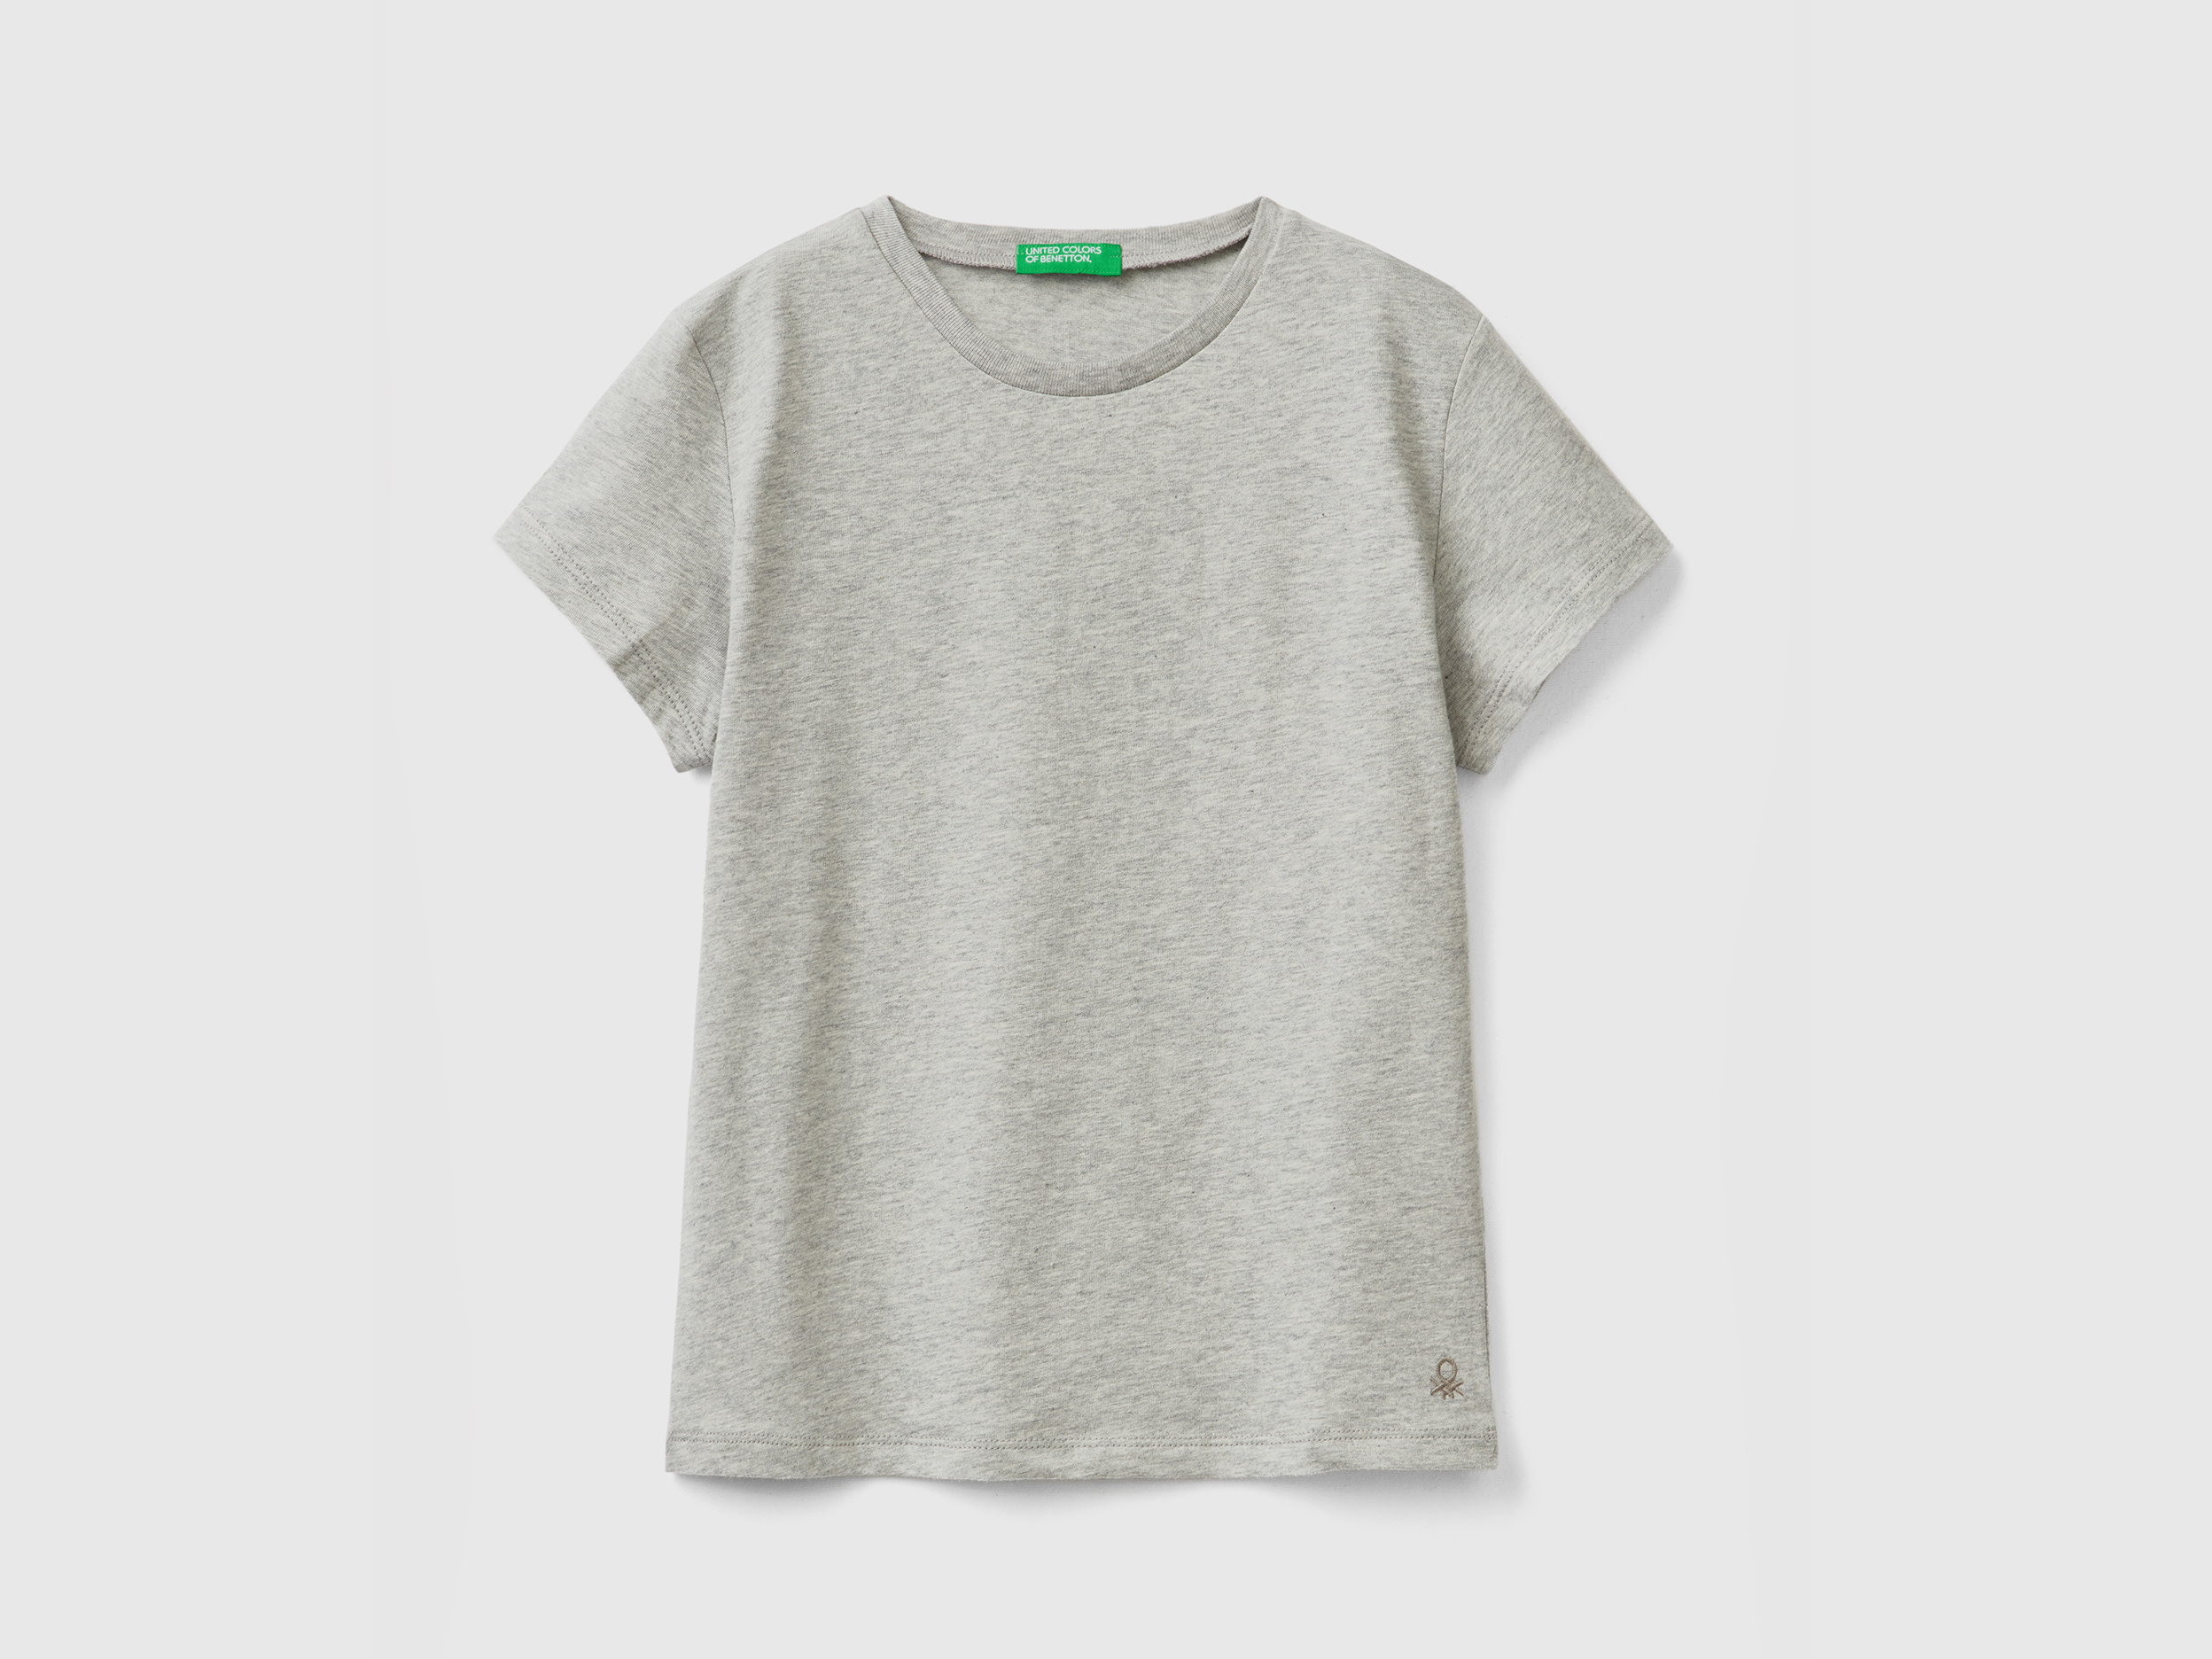 Benetton, T-shirt In Pure Organic Cotton, size M, Light Gray, Kids